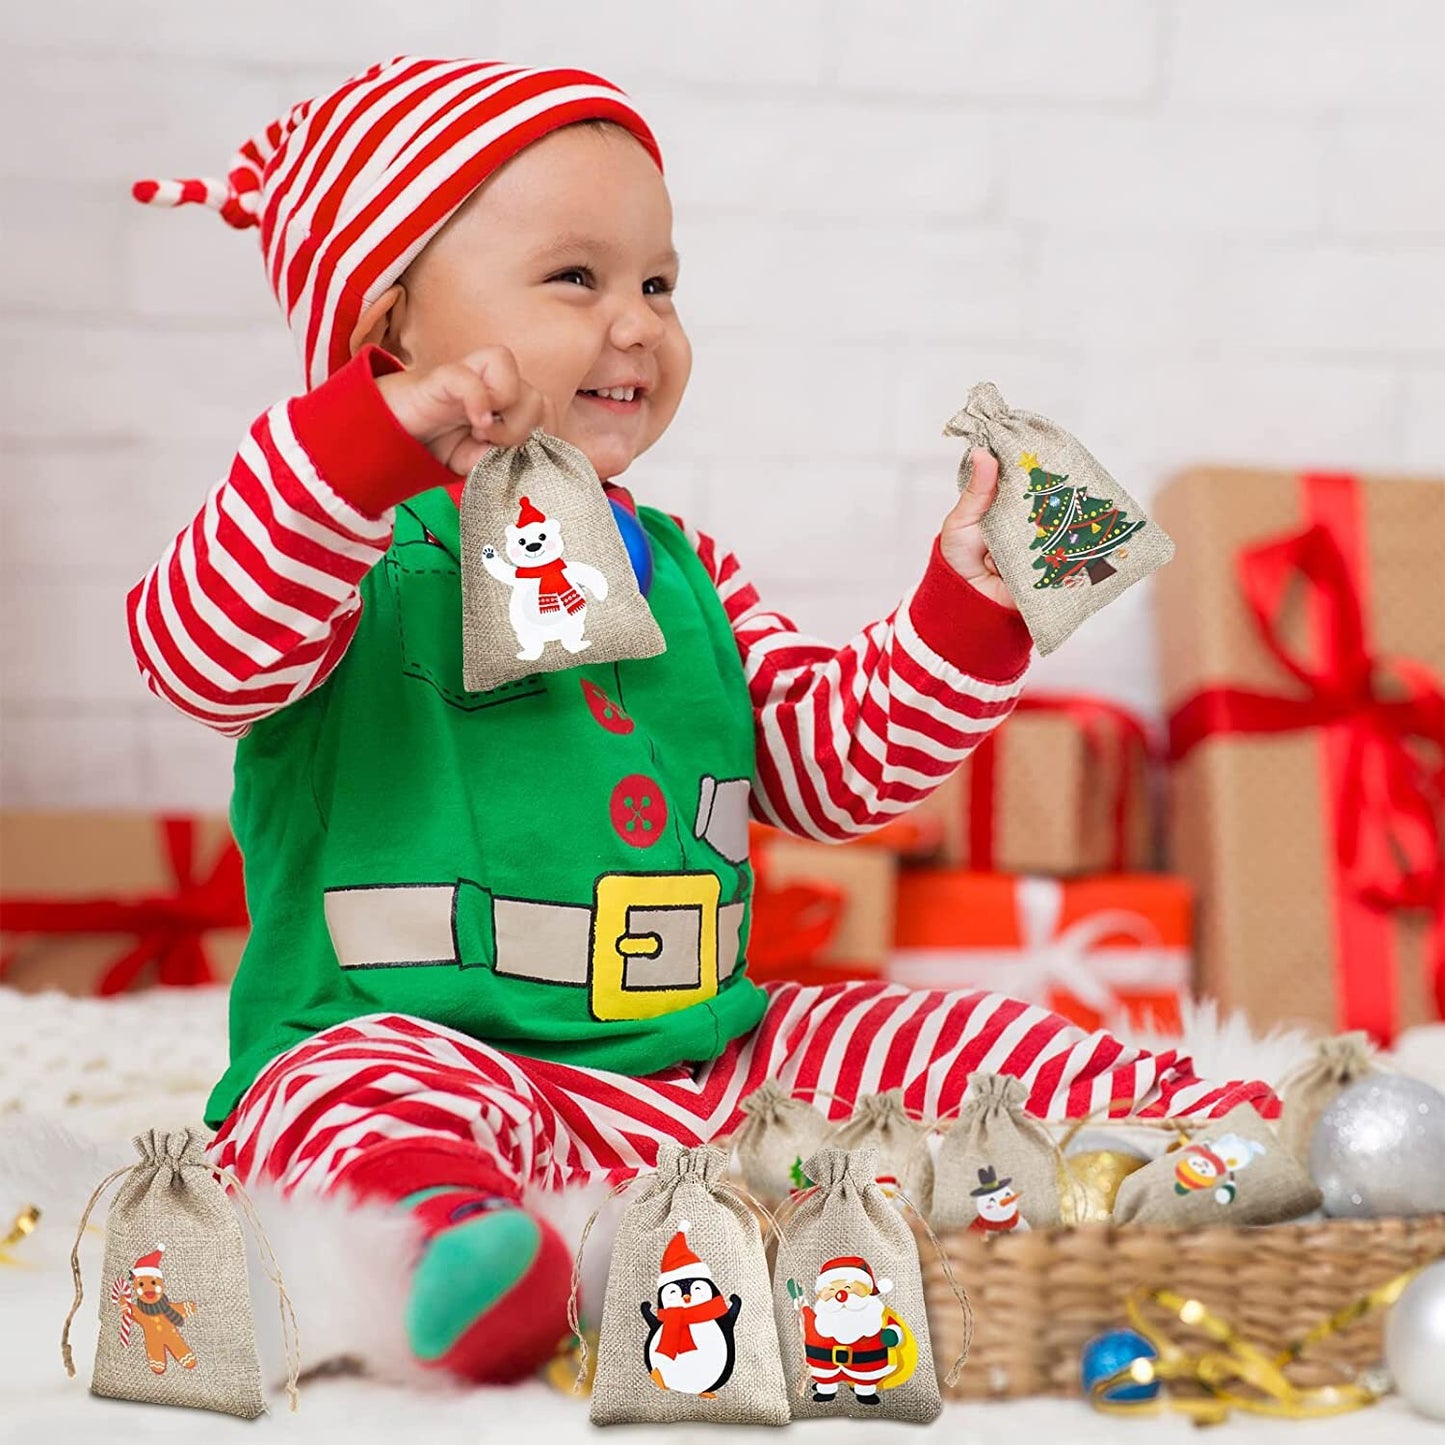 Christmas Gift Bags - 10ct Burlap Treat Bags - Drawstring Bags with Holiday Reindeer Snowman Gingerbread Santa Polar Bear Designs